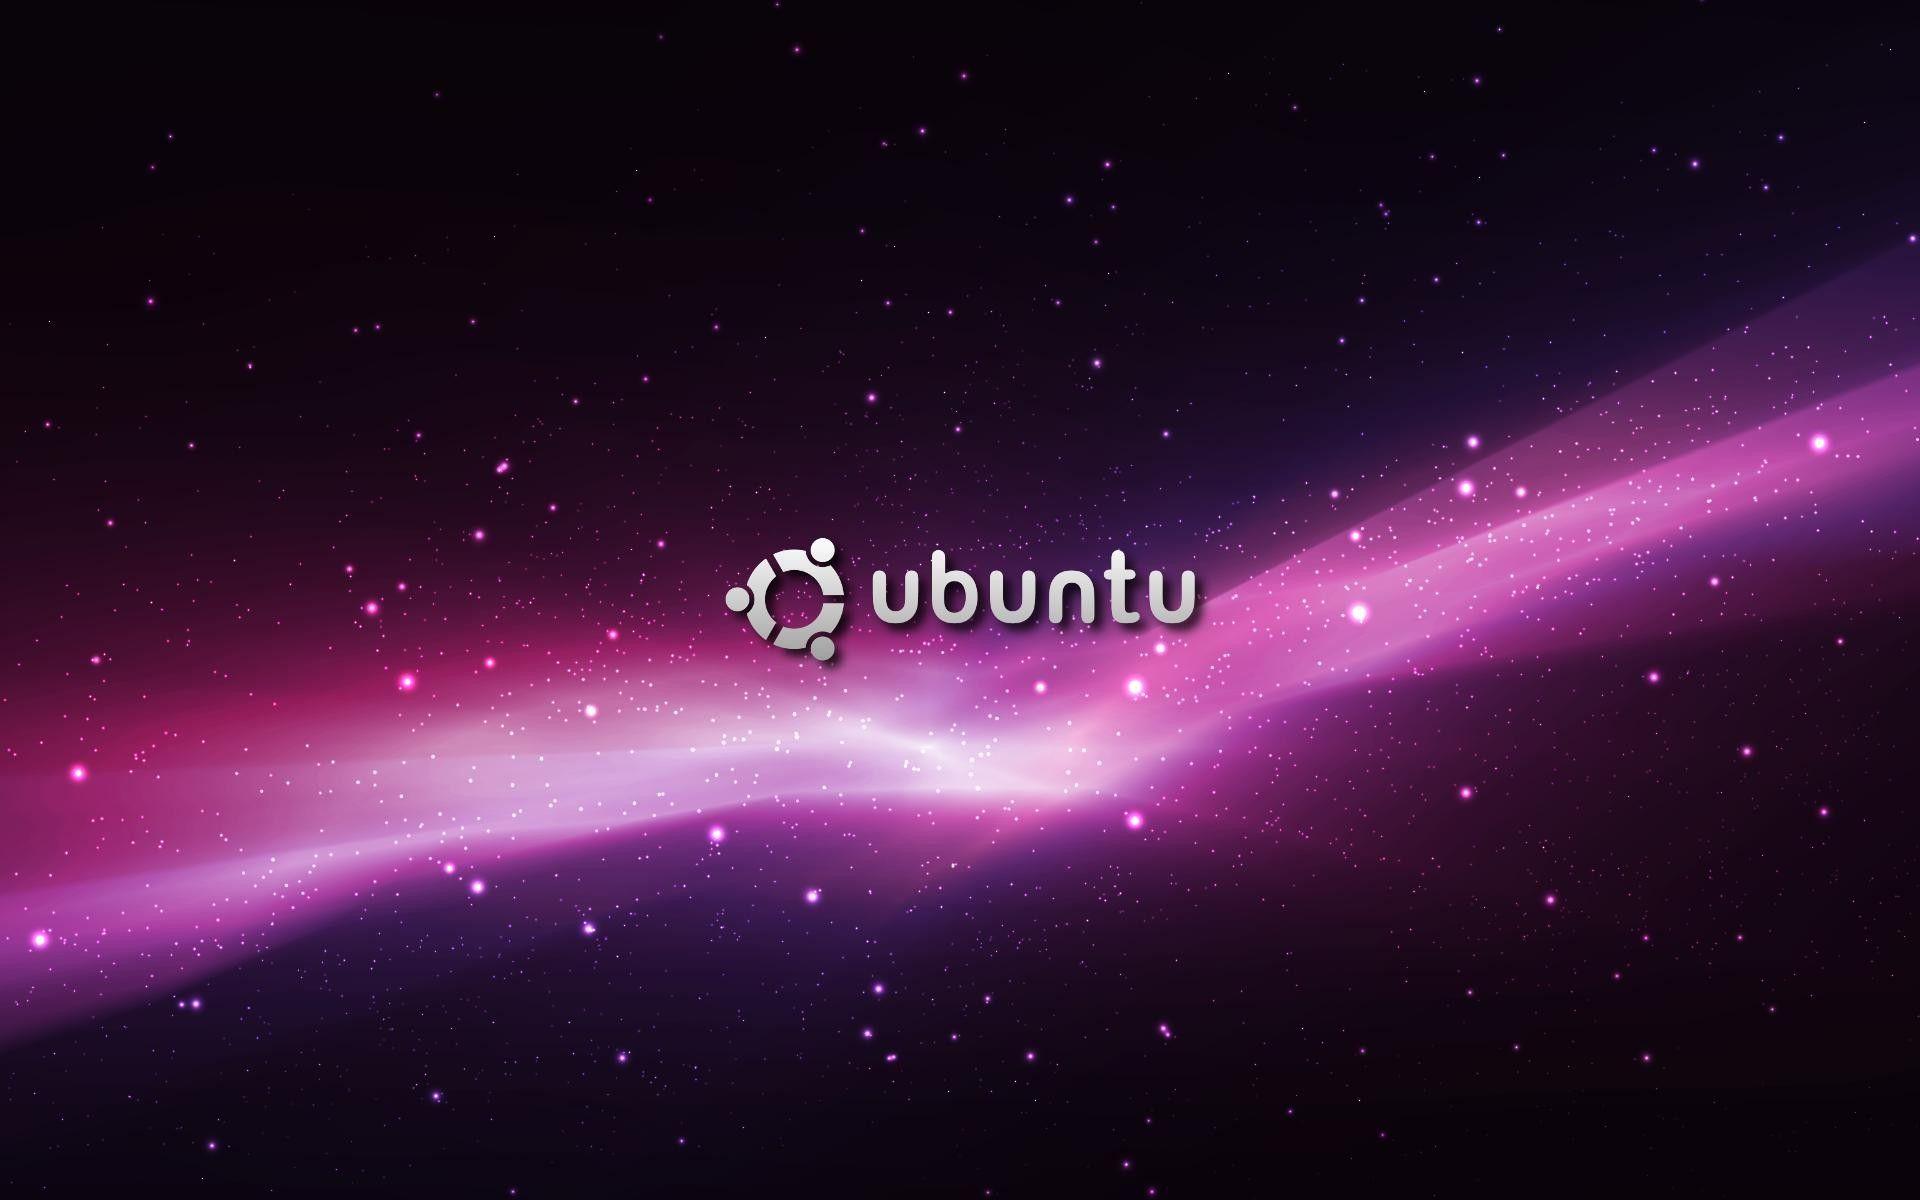 Ubuntu Hd Wallpapers